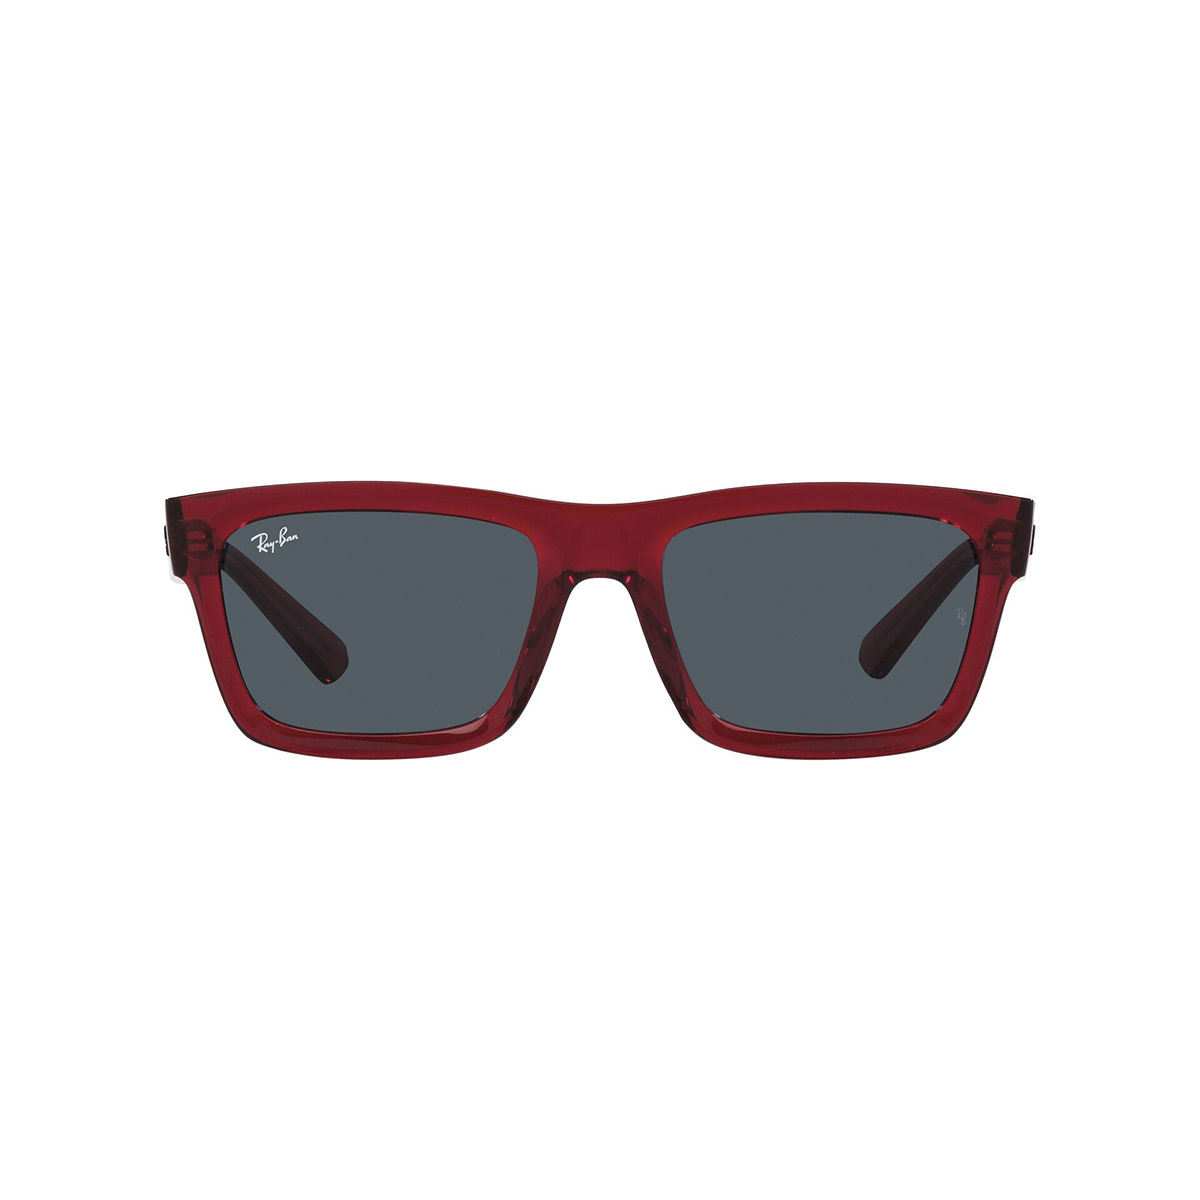 ANSI Z80.3 - Sunglasses Requirements - ANSI Blog